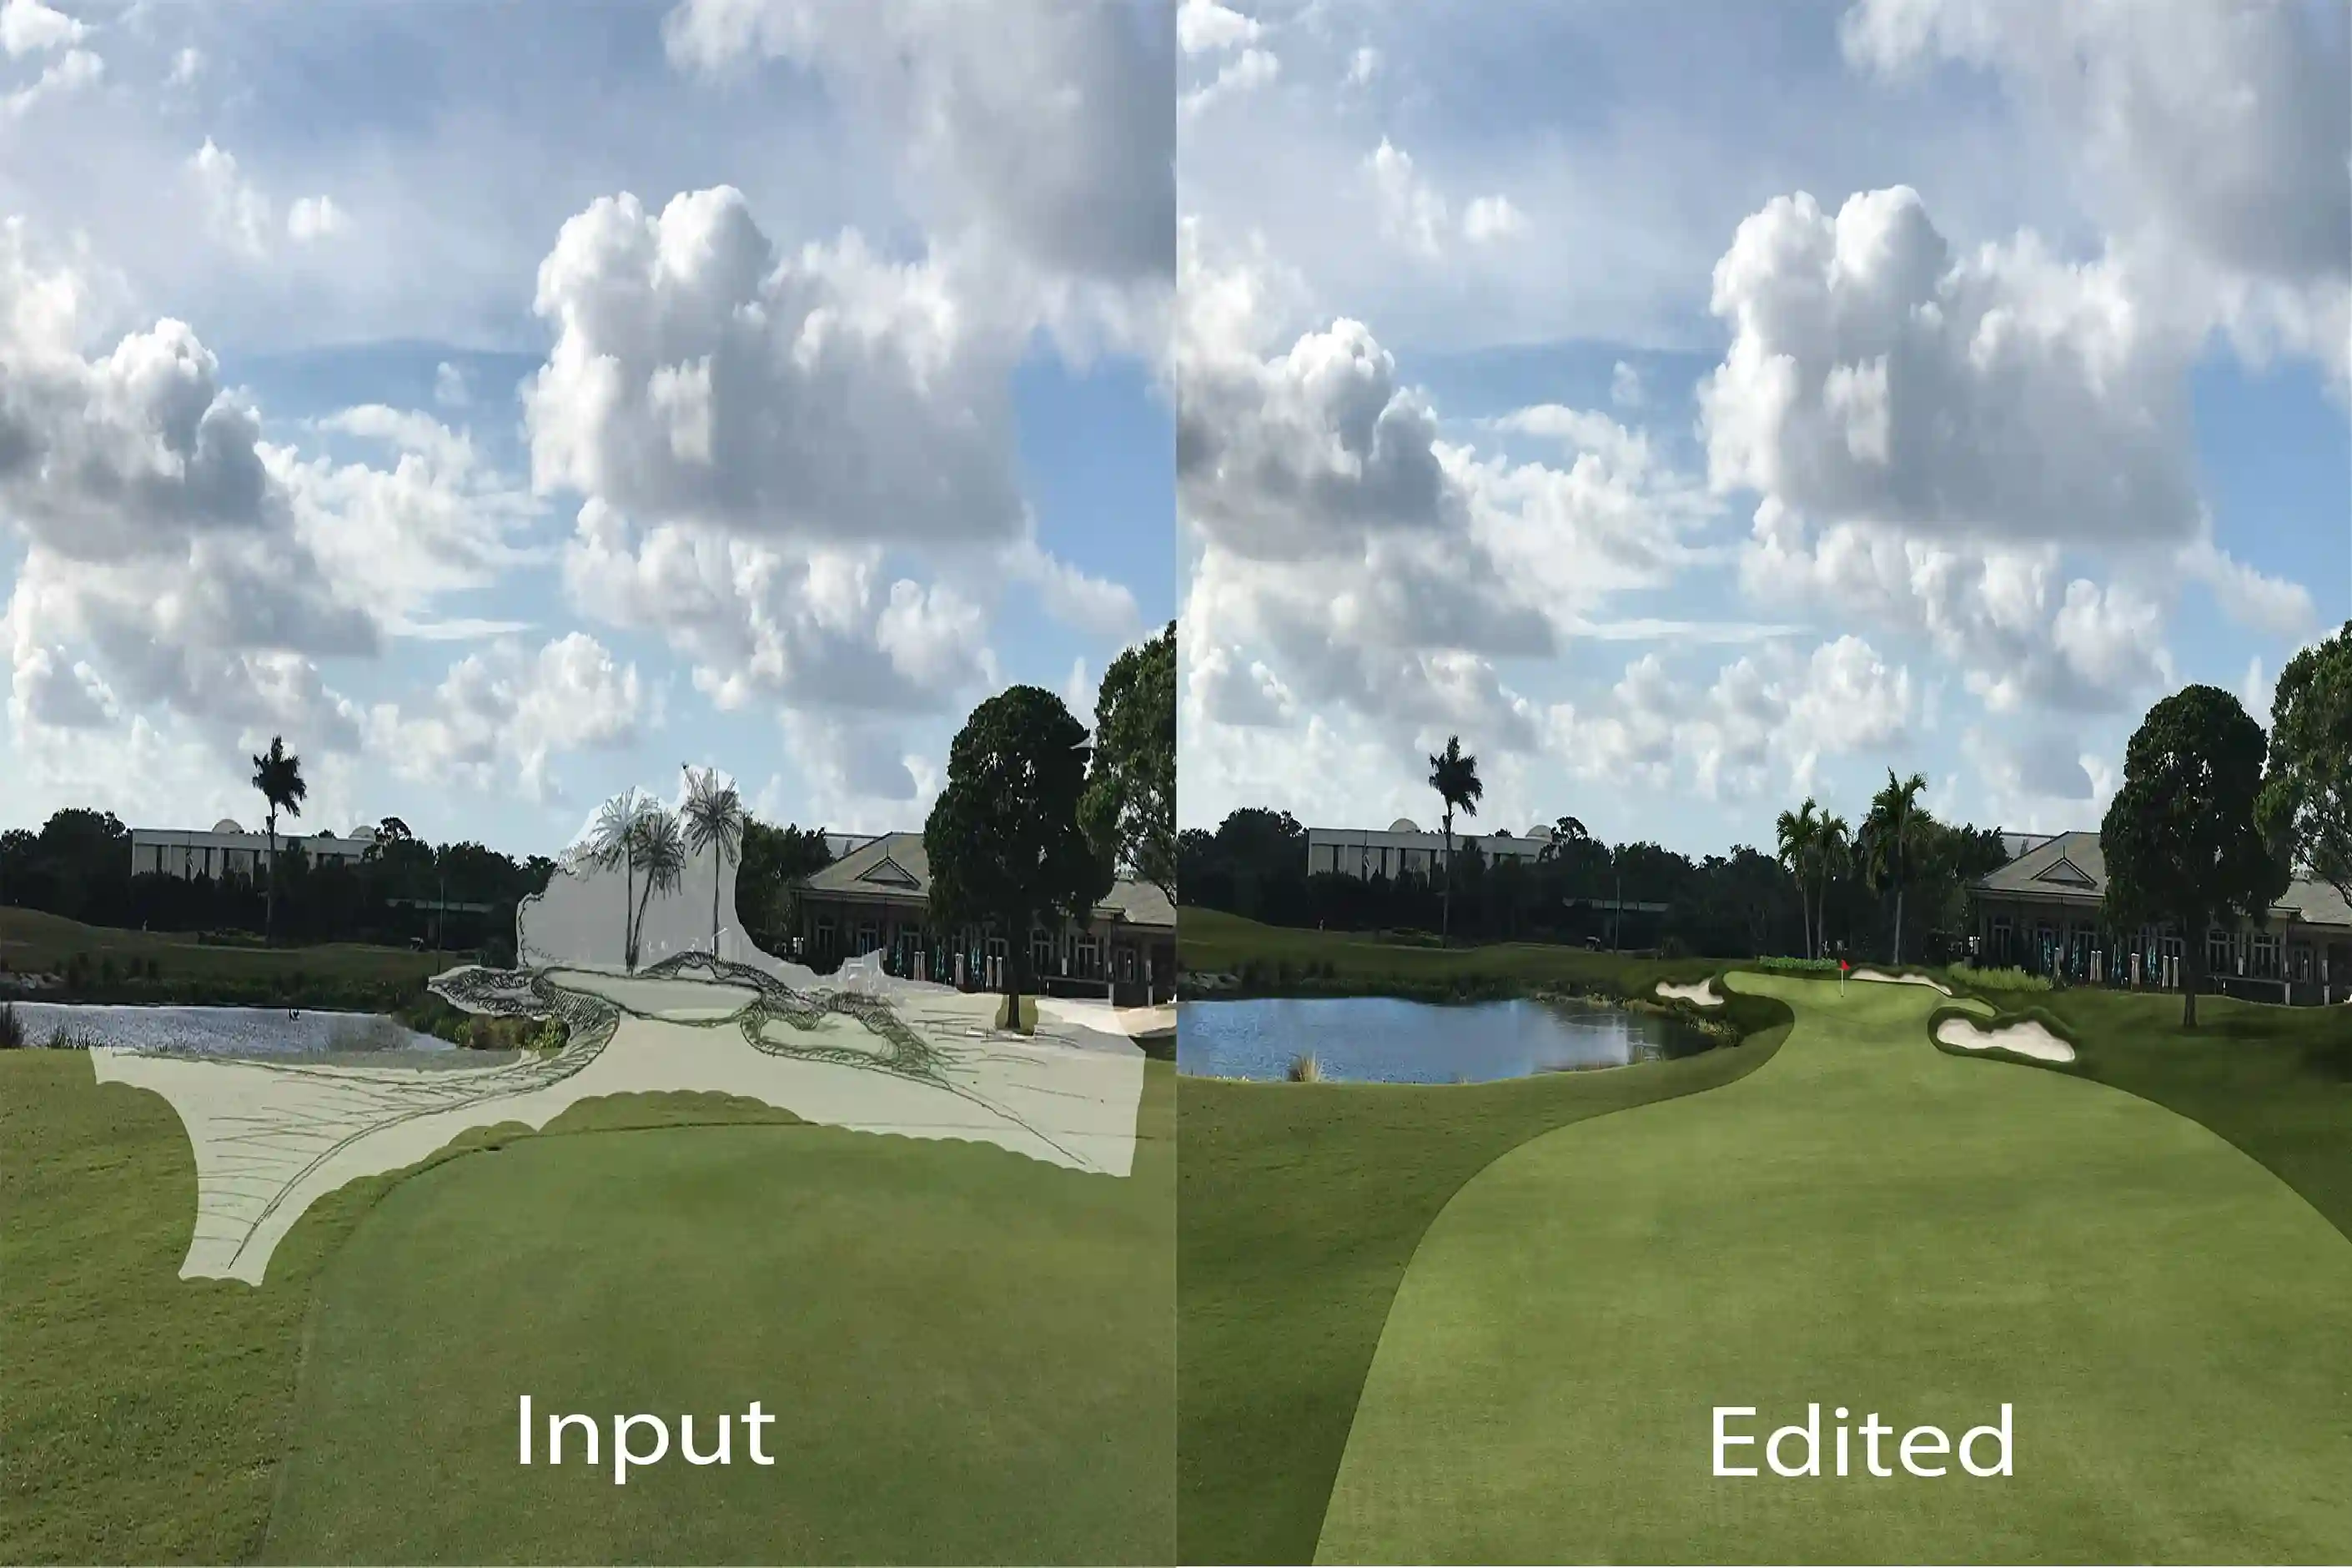 Golf Course Map, Golf Hole Image, Image Editing